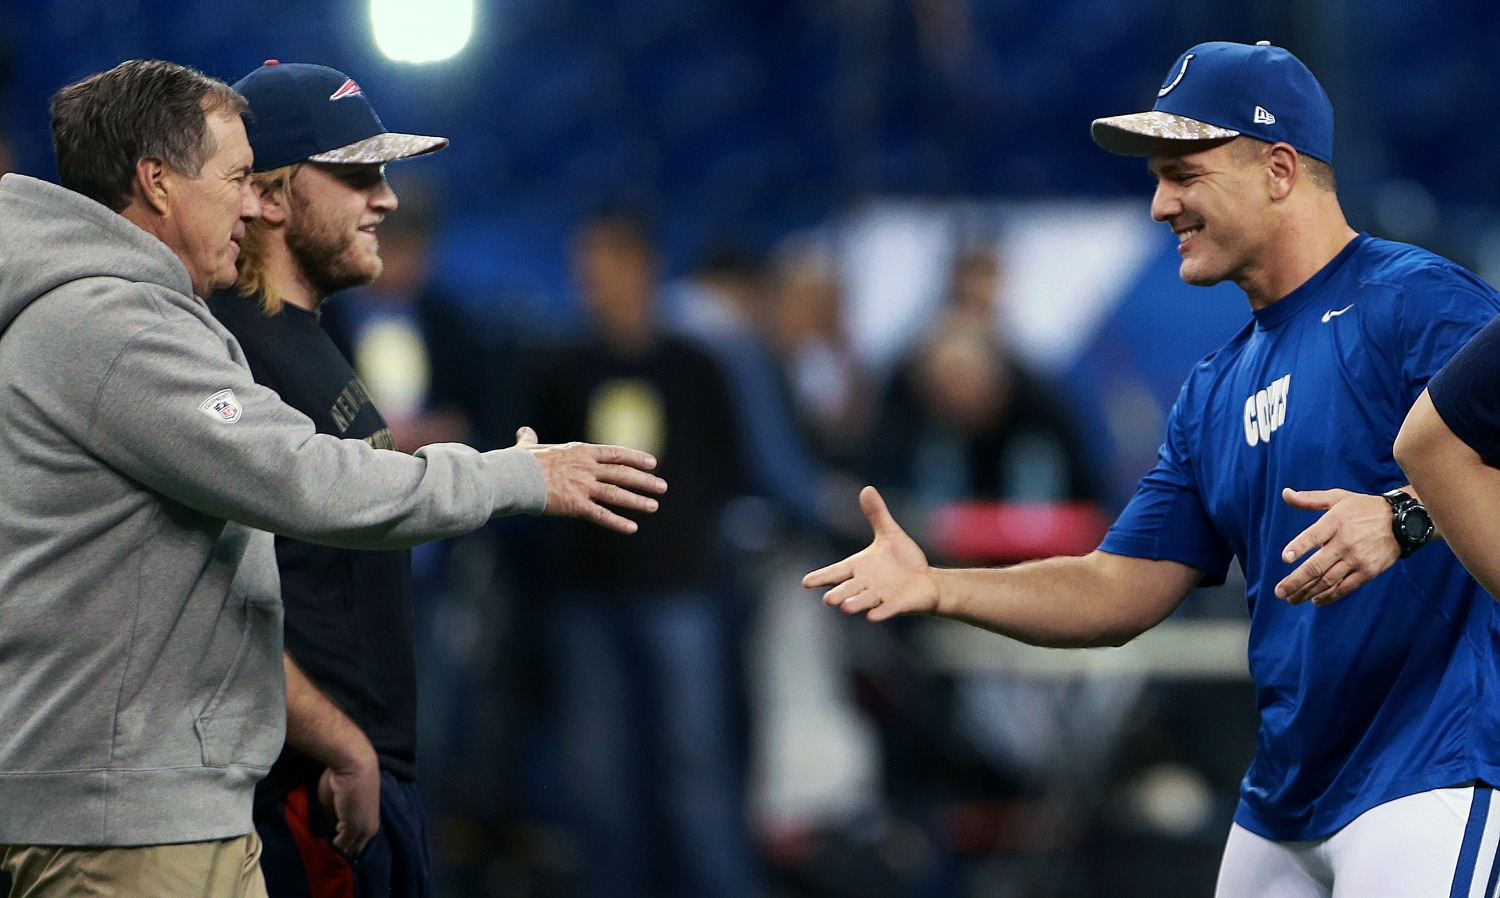 Patriots head coach Bill Belichick shakes hands with Colts kicker Adam Vinatieri before a game.